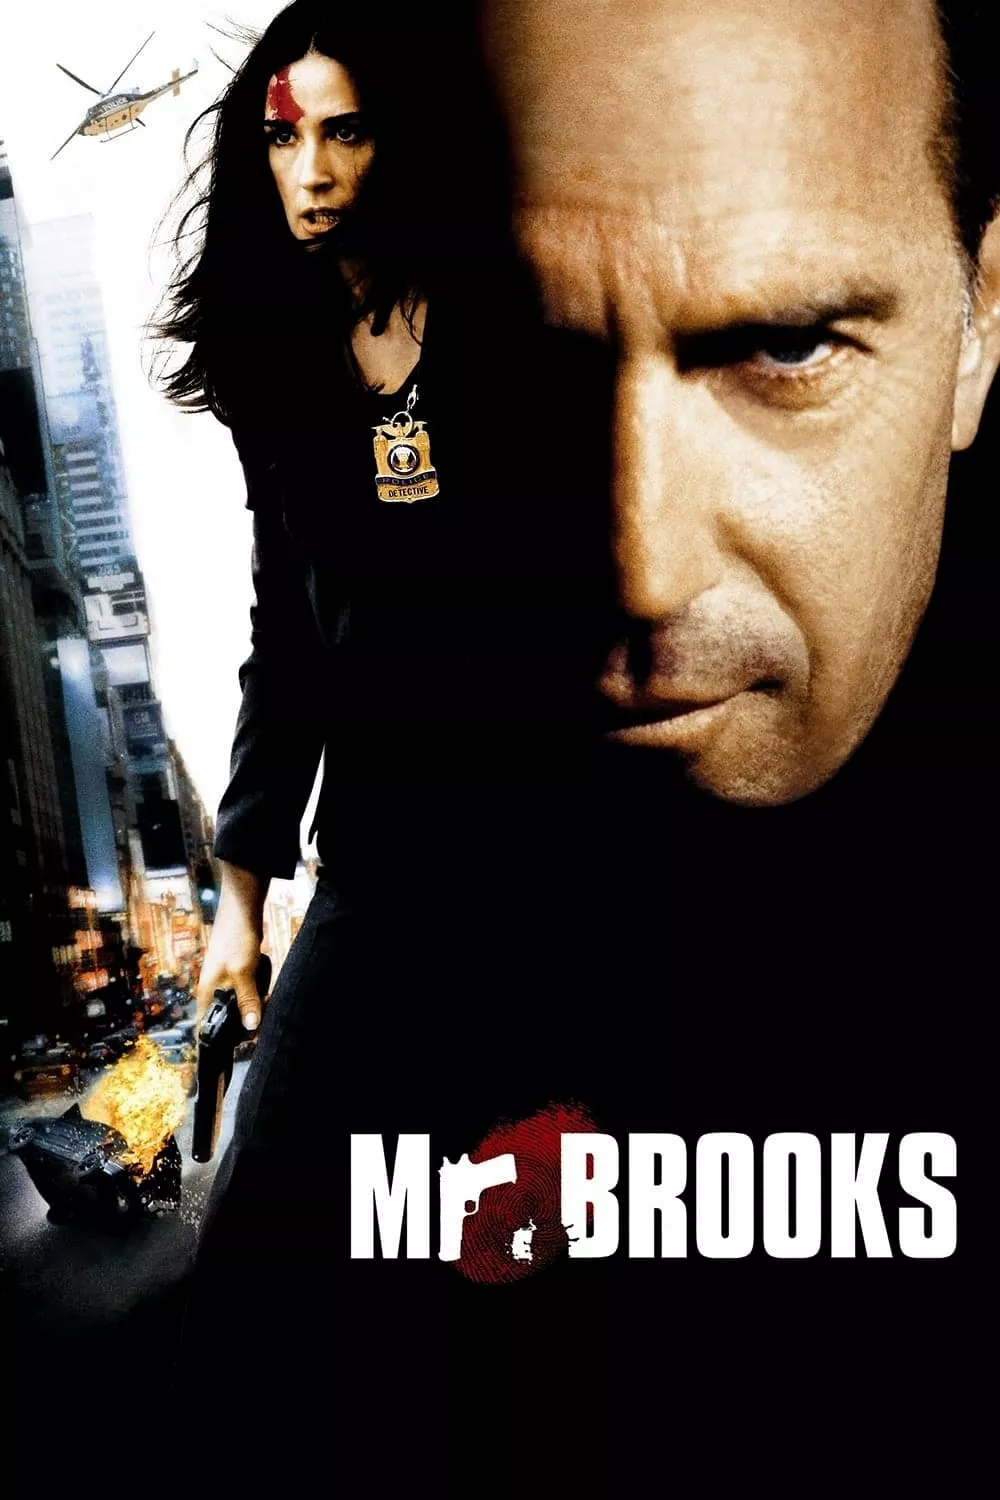 Mr. Brooks (2007) มิสเตอร์บรูกส์ สุภาพบุรุษอำมหิต